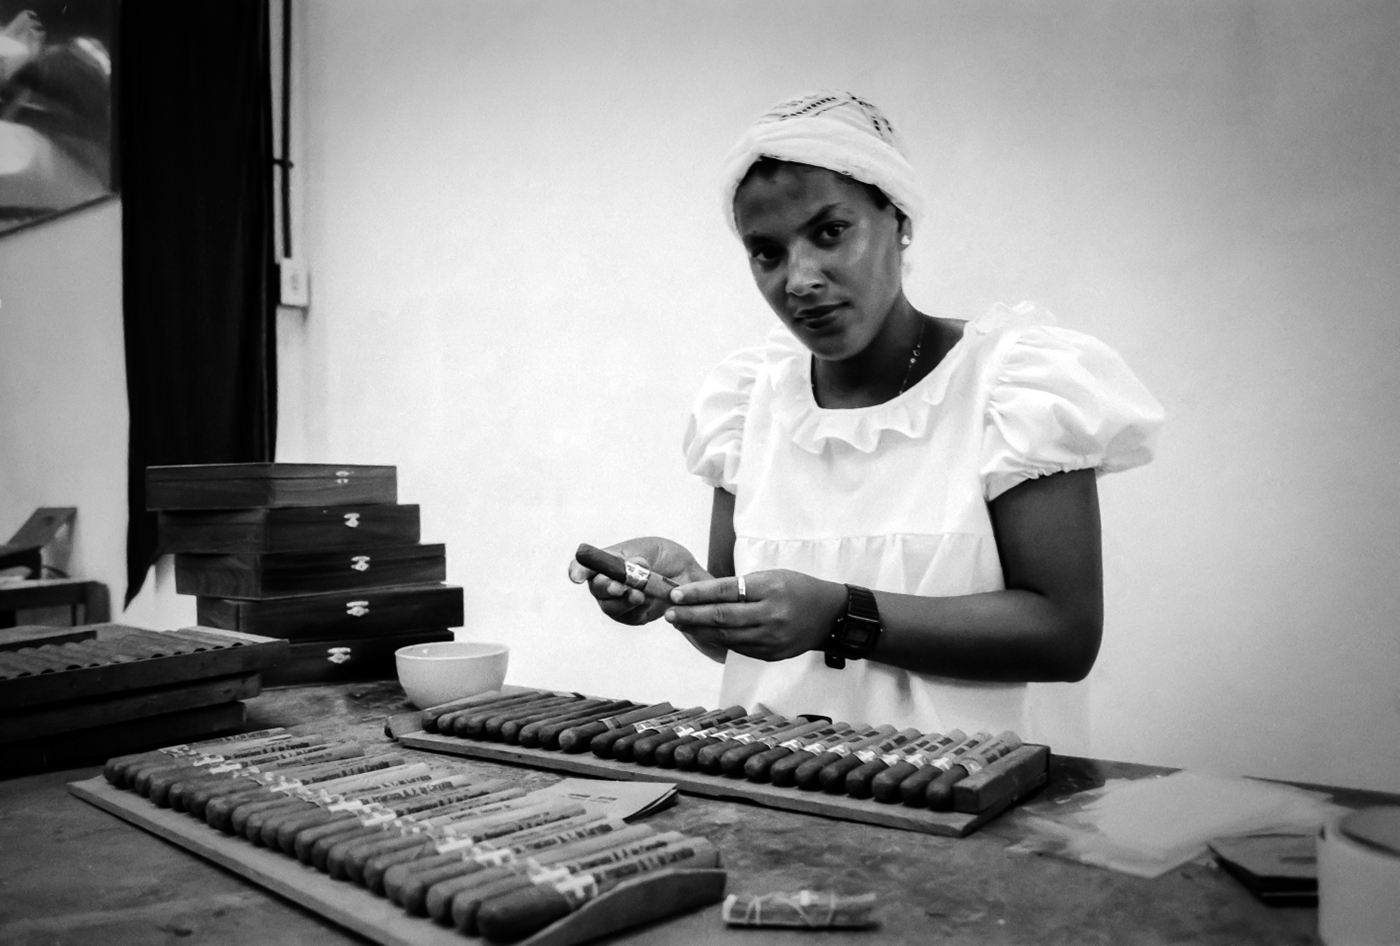 Brasil reconcavo tobaco são felix cigar cigarettes bahia worker woman plantation